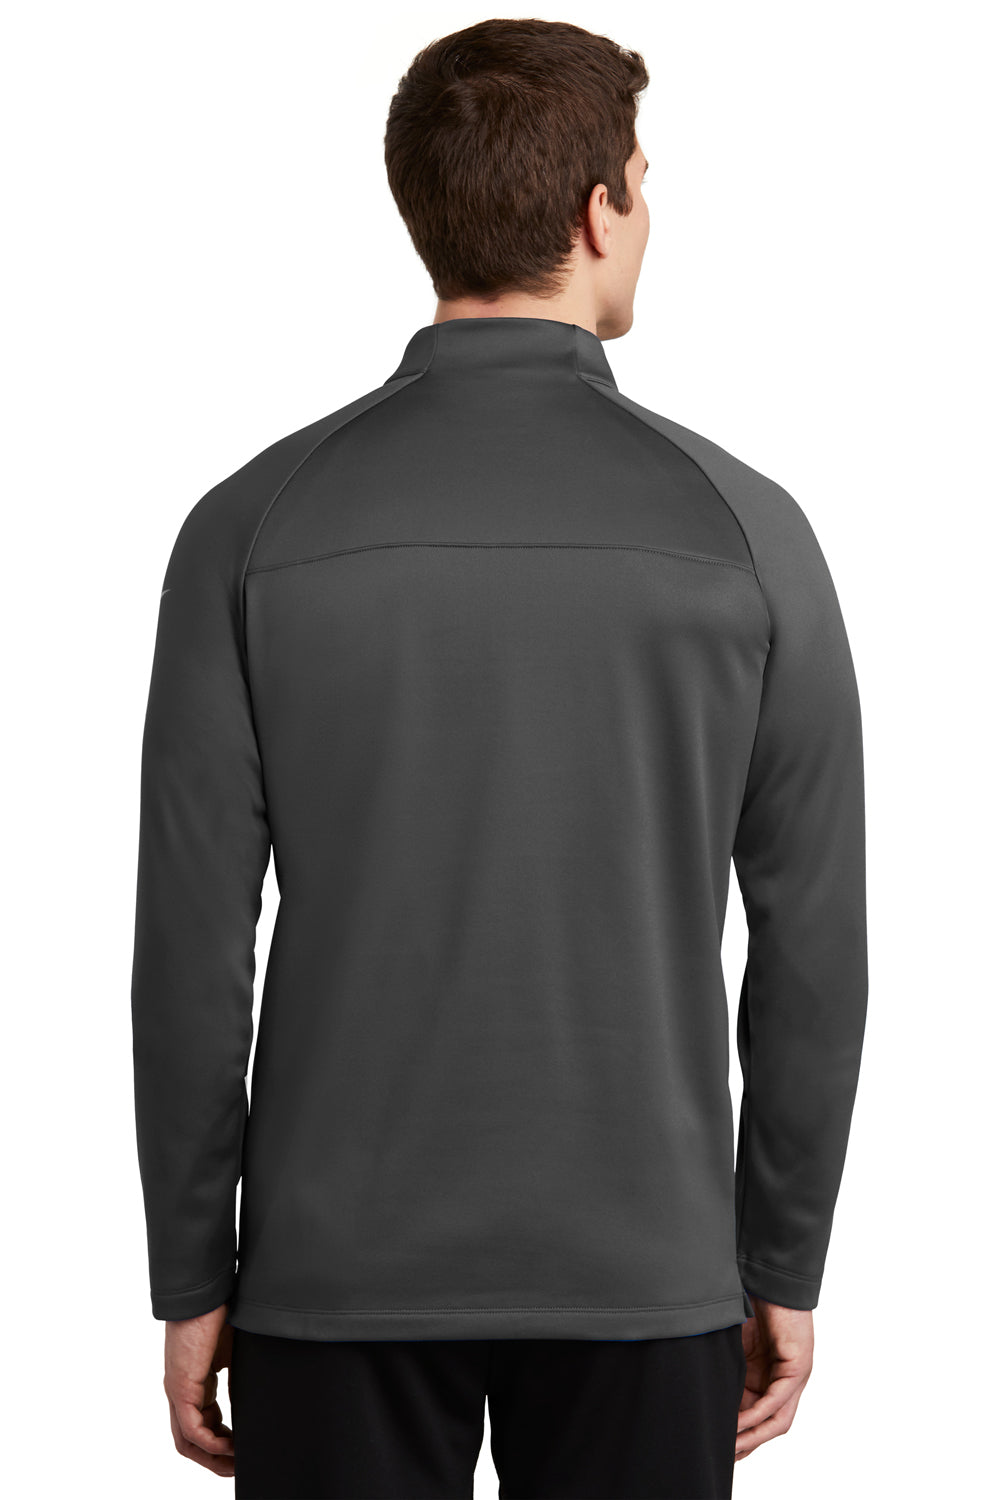 Nike NKAH6254 Mens Therma-Fit Moisture Wicking Fleece 1/4 Zip Sweatshirt Anthracite Grey Model Back